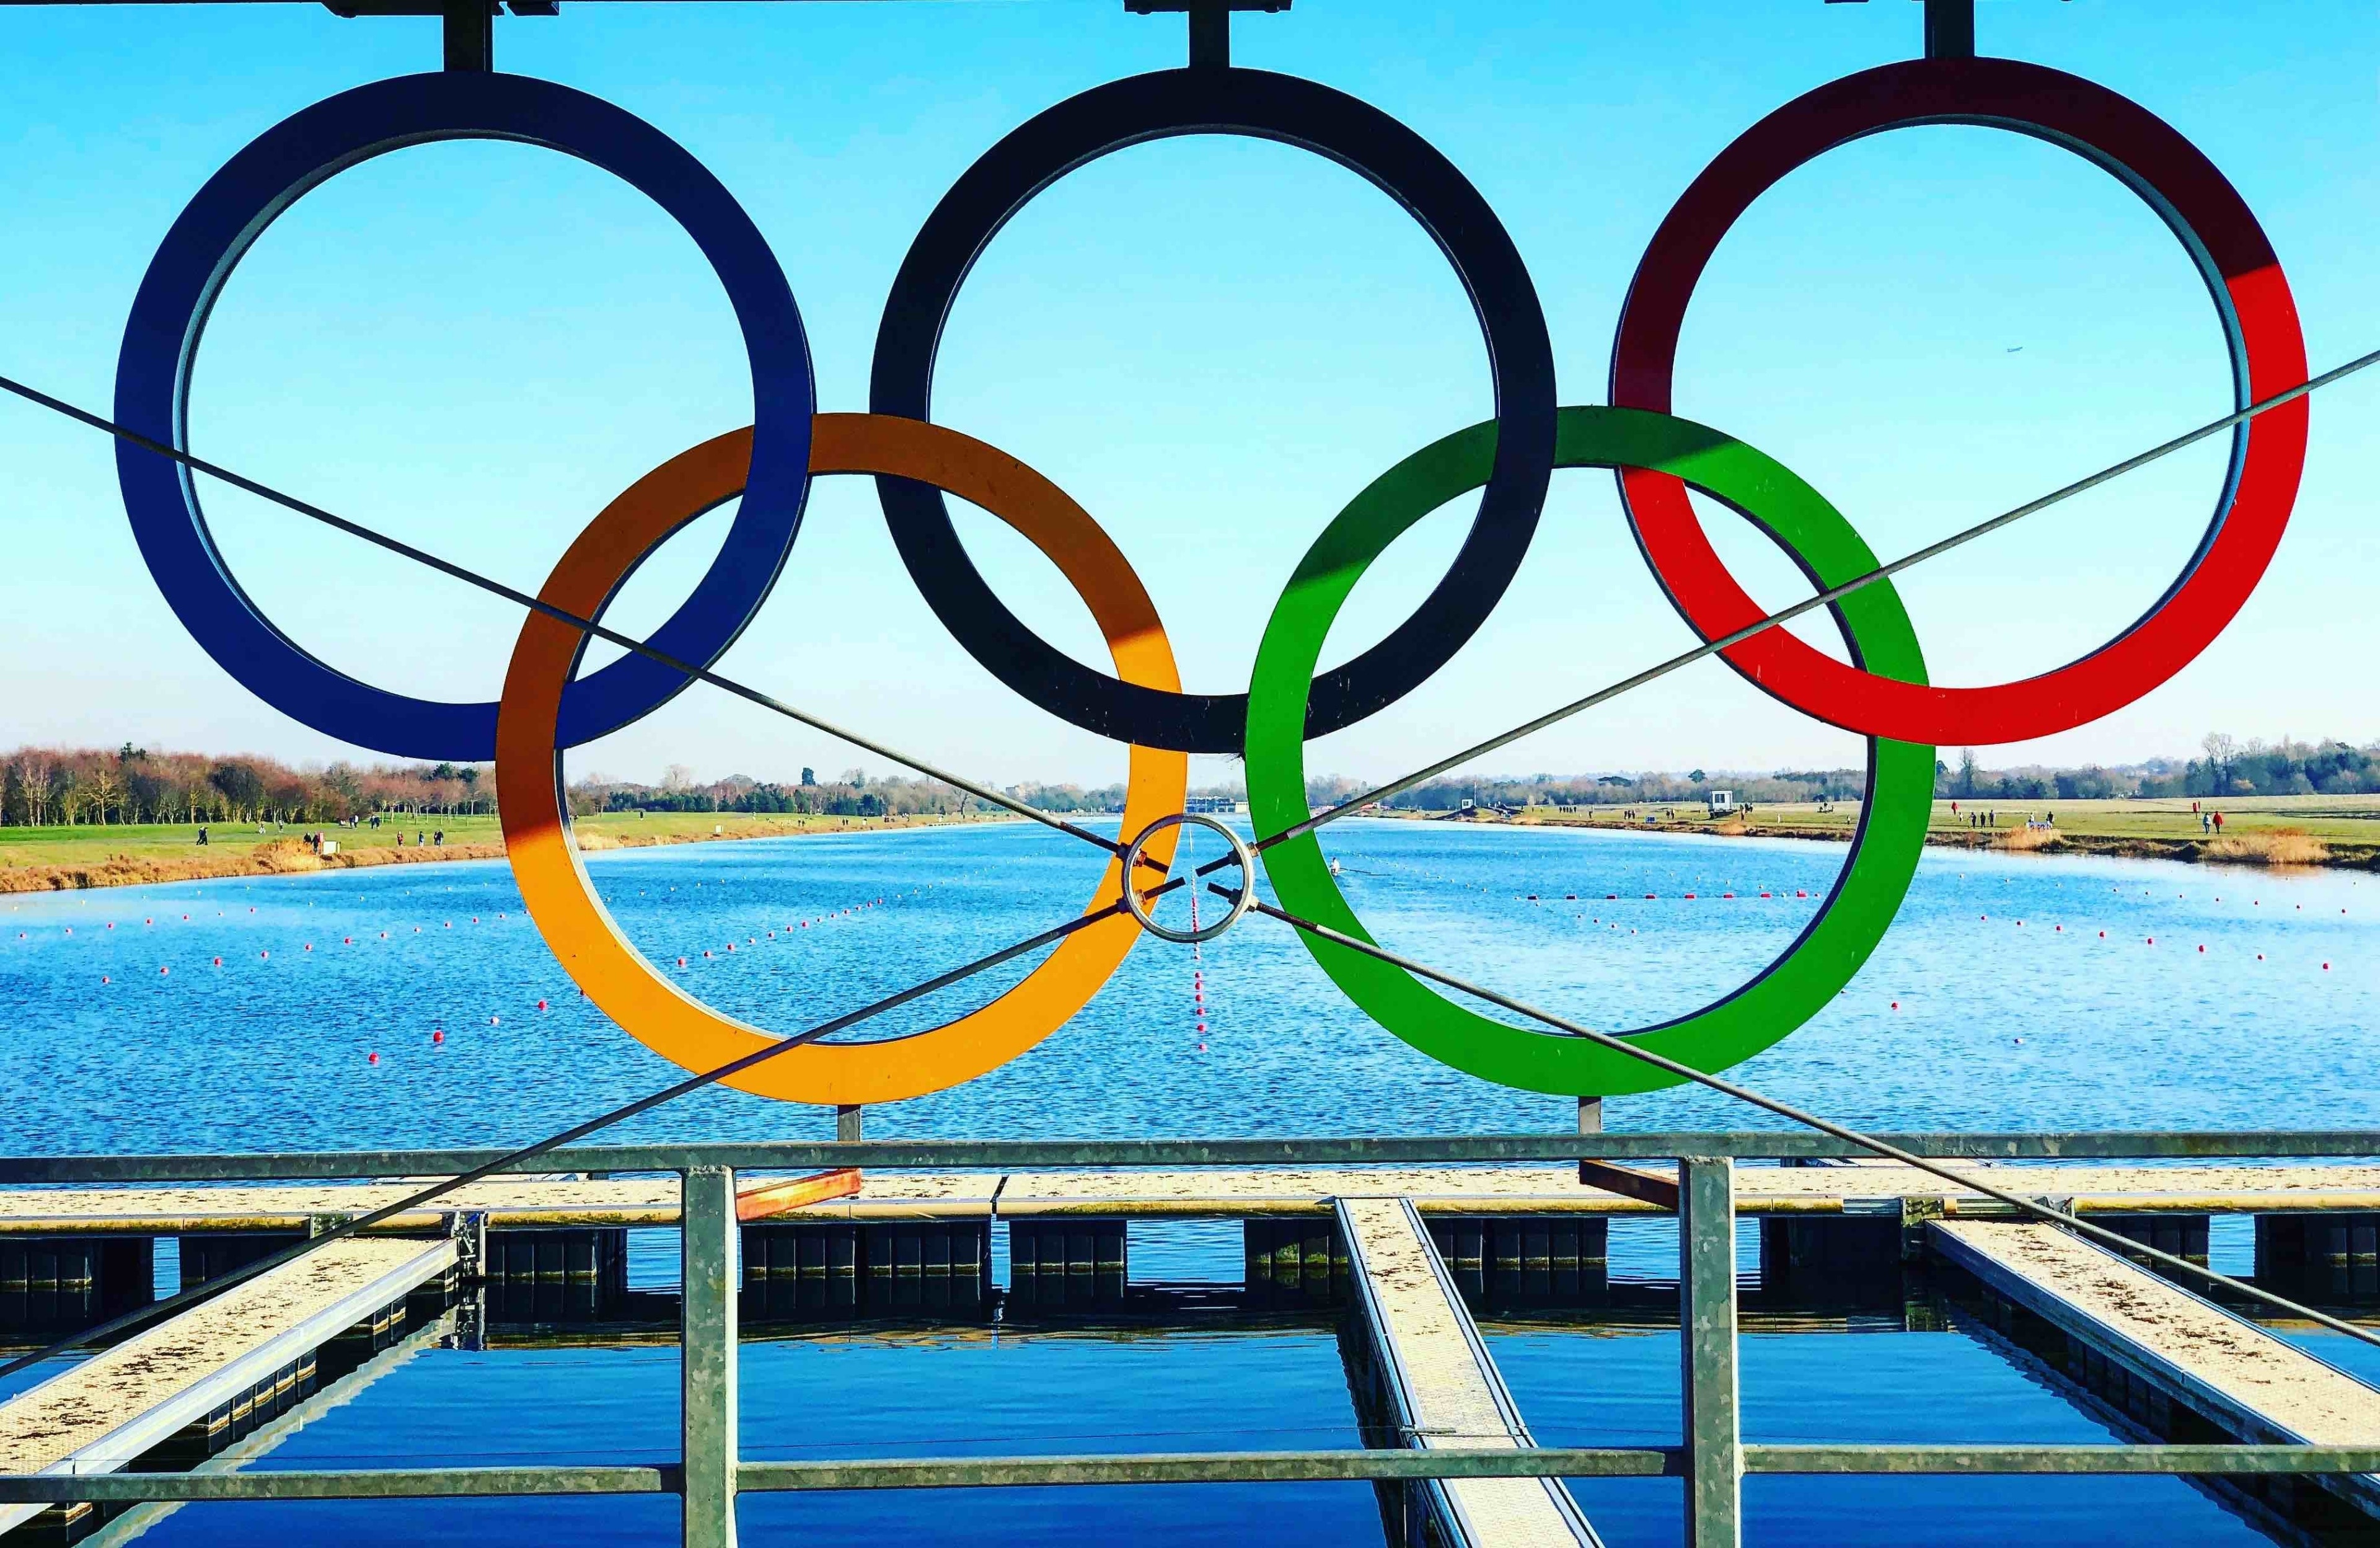 Enjoying the beautiful February sunshine at Eton Dorney rowing lake, remembering the amazing summer of 2012 and the Olympic takeover #olympics #london2012 🇬🇧